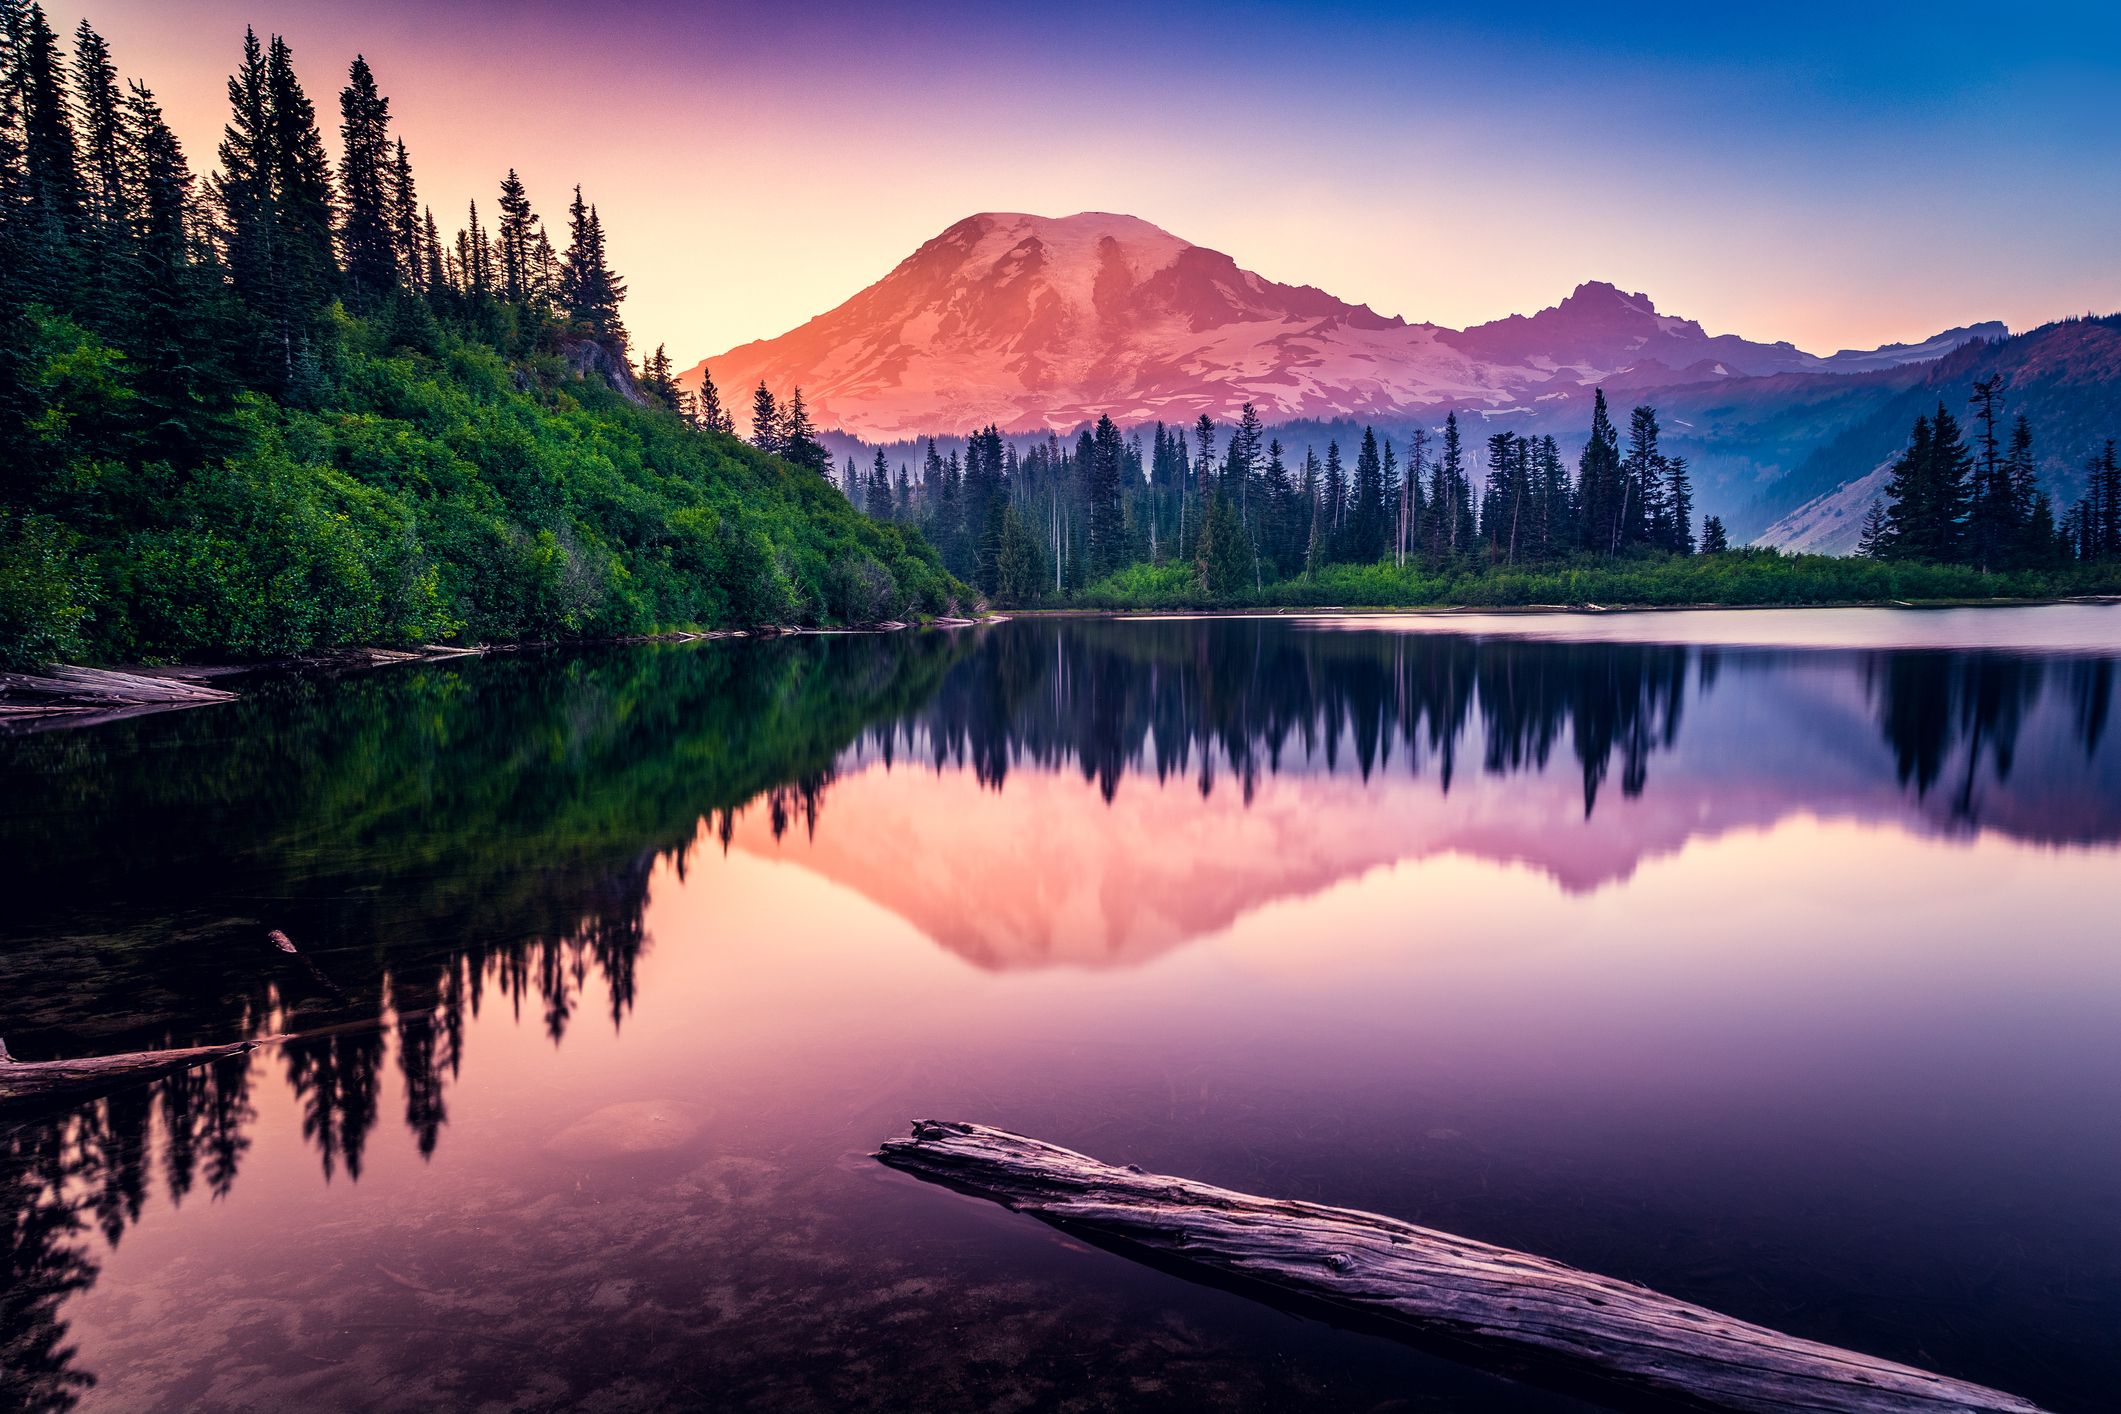 mountain-reflection-in-bench-lake-mt-rainier-royalty-free-image-1587577282.jpg